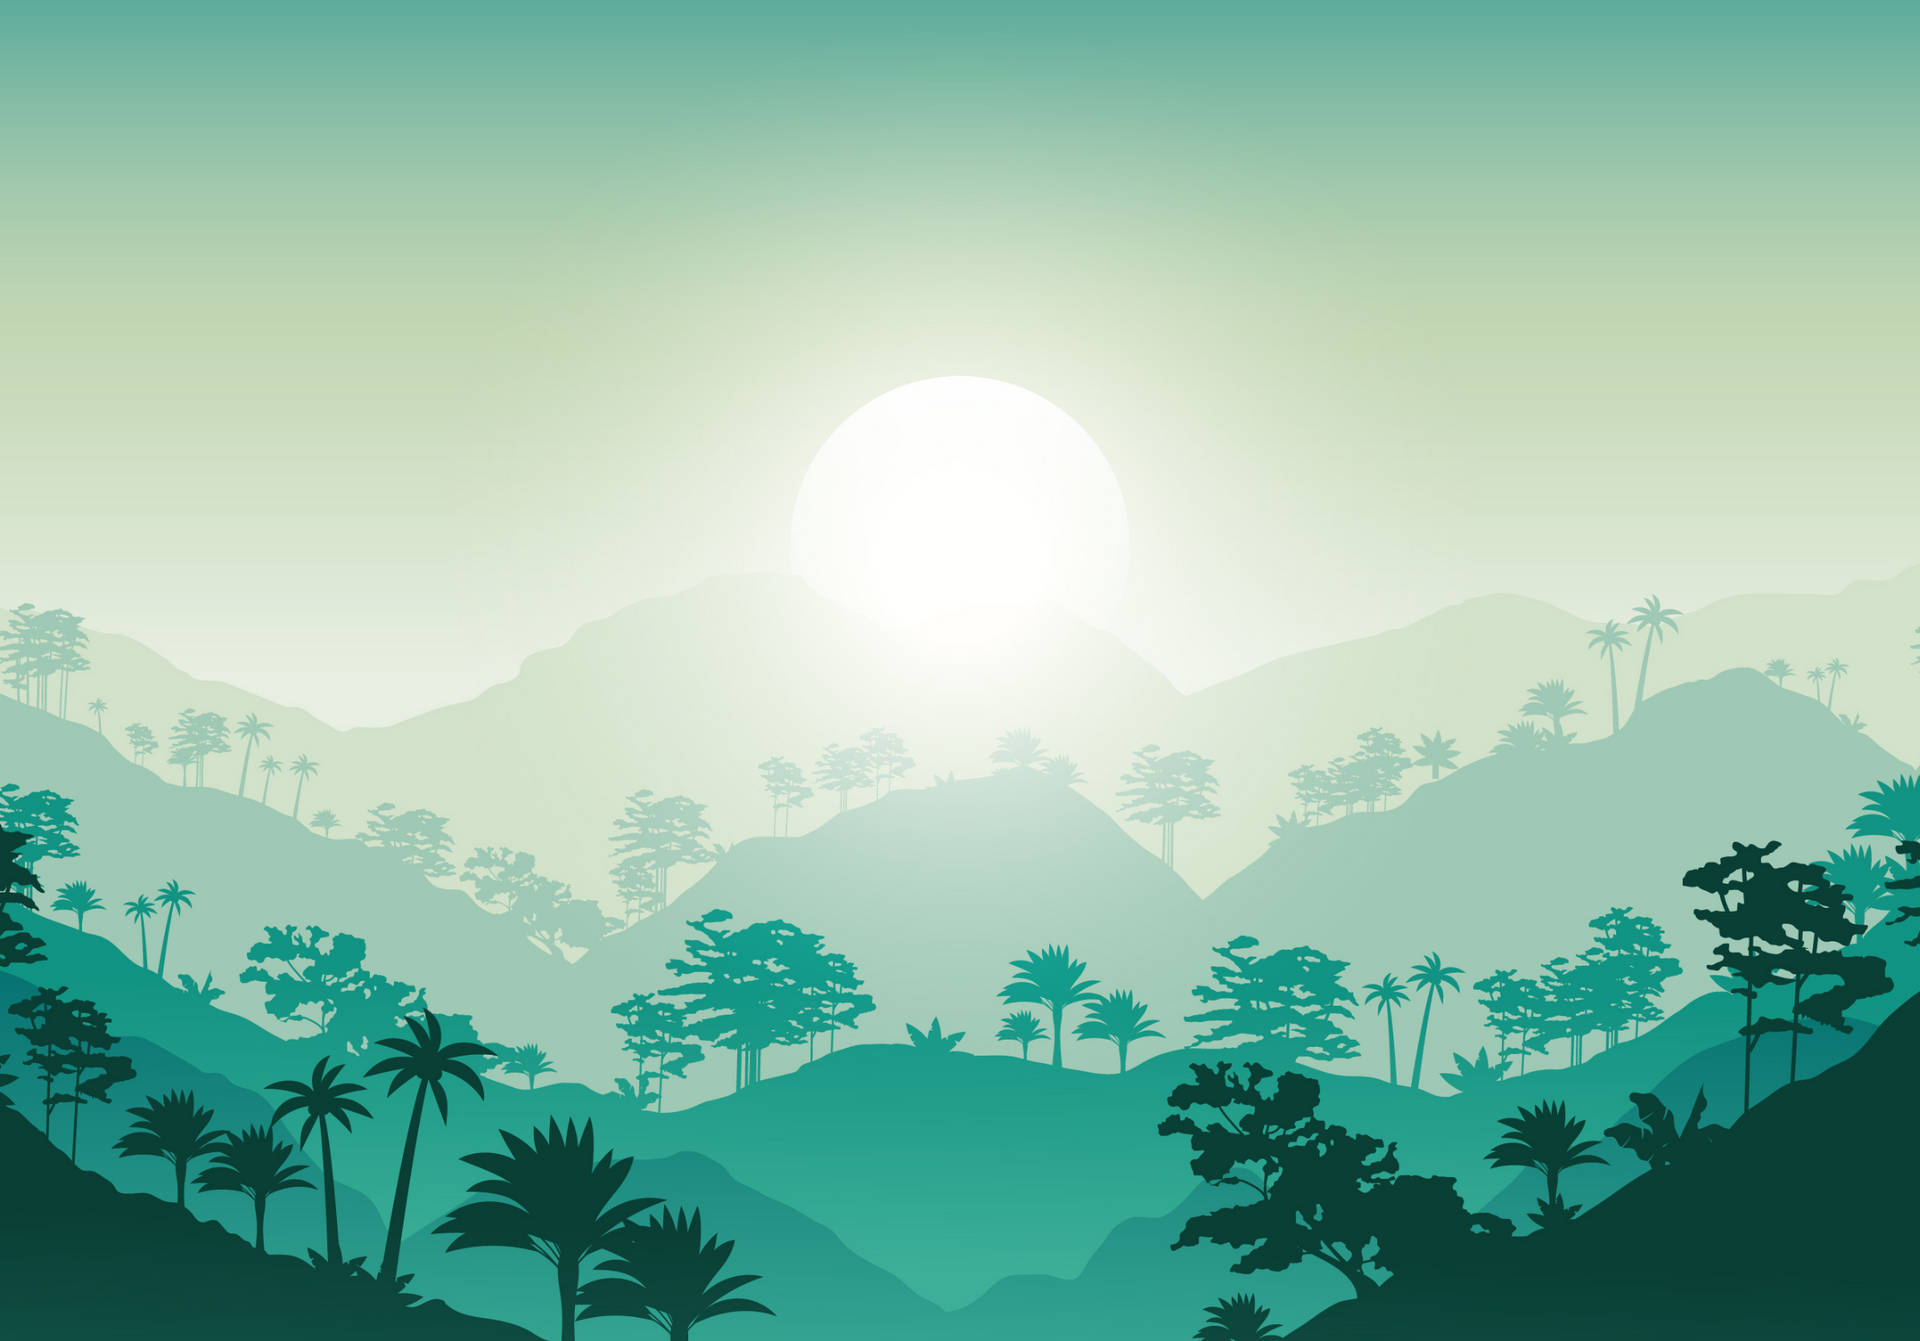 Ipad Pro 12.9 Turquoise Mountain Landscape Picture